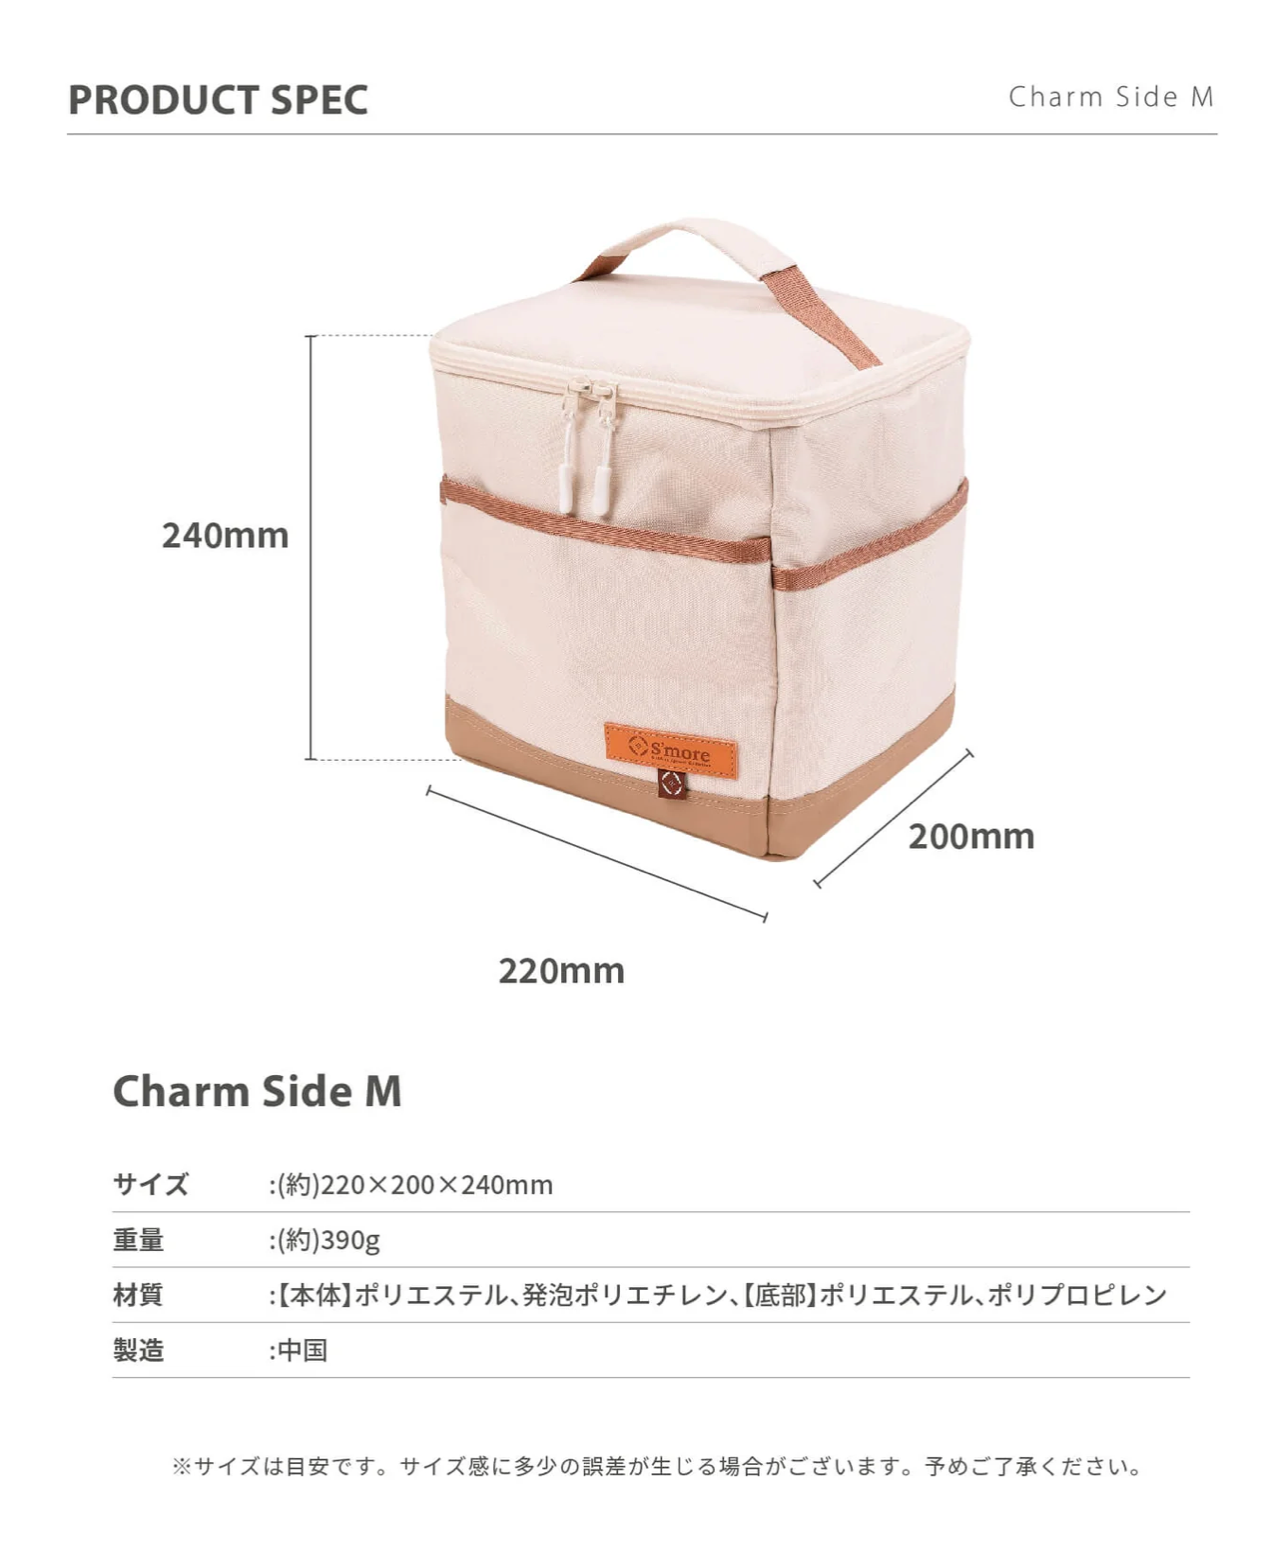 Charm Side M可掛式方型收納袋